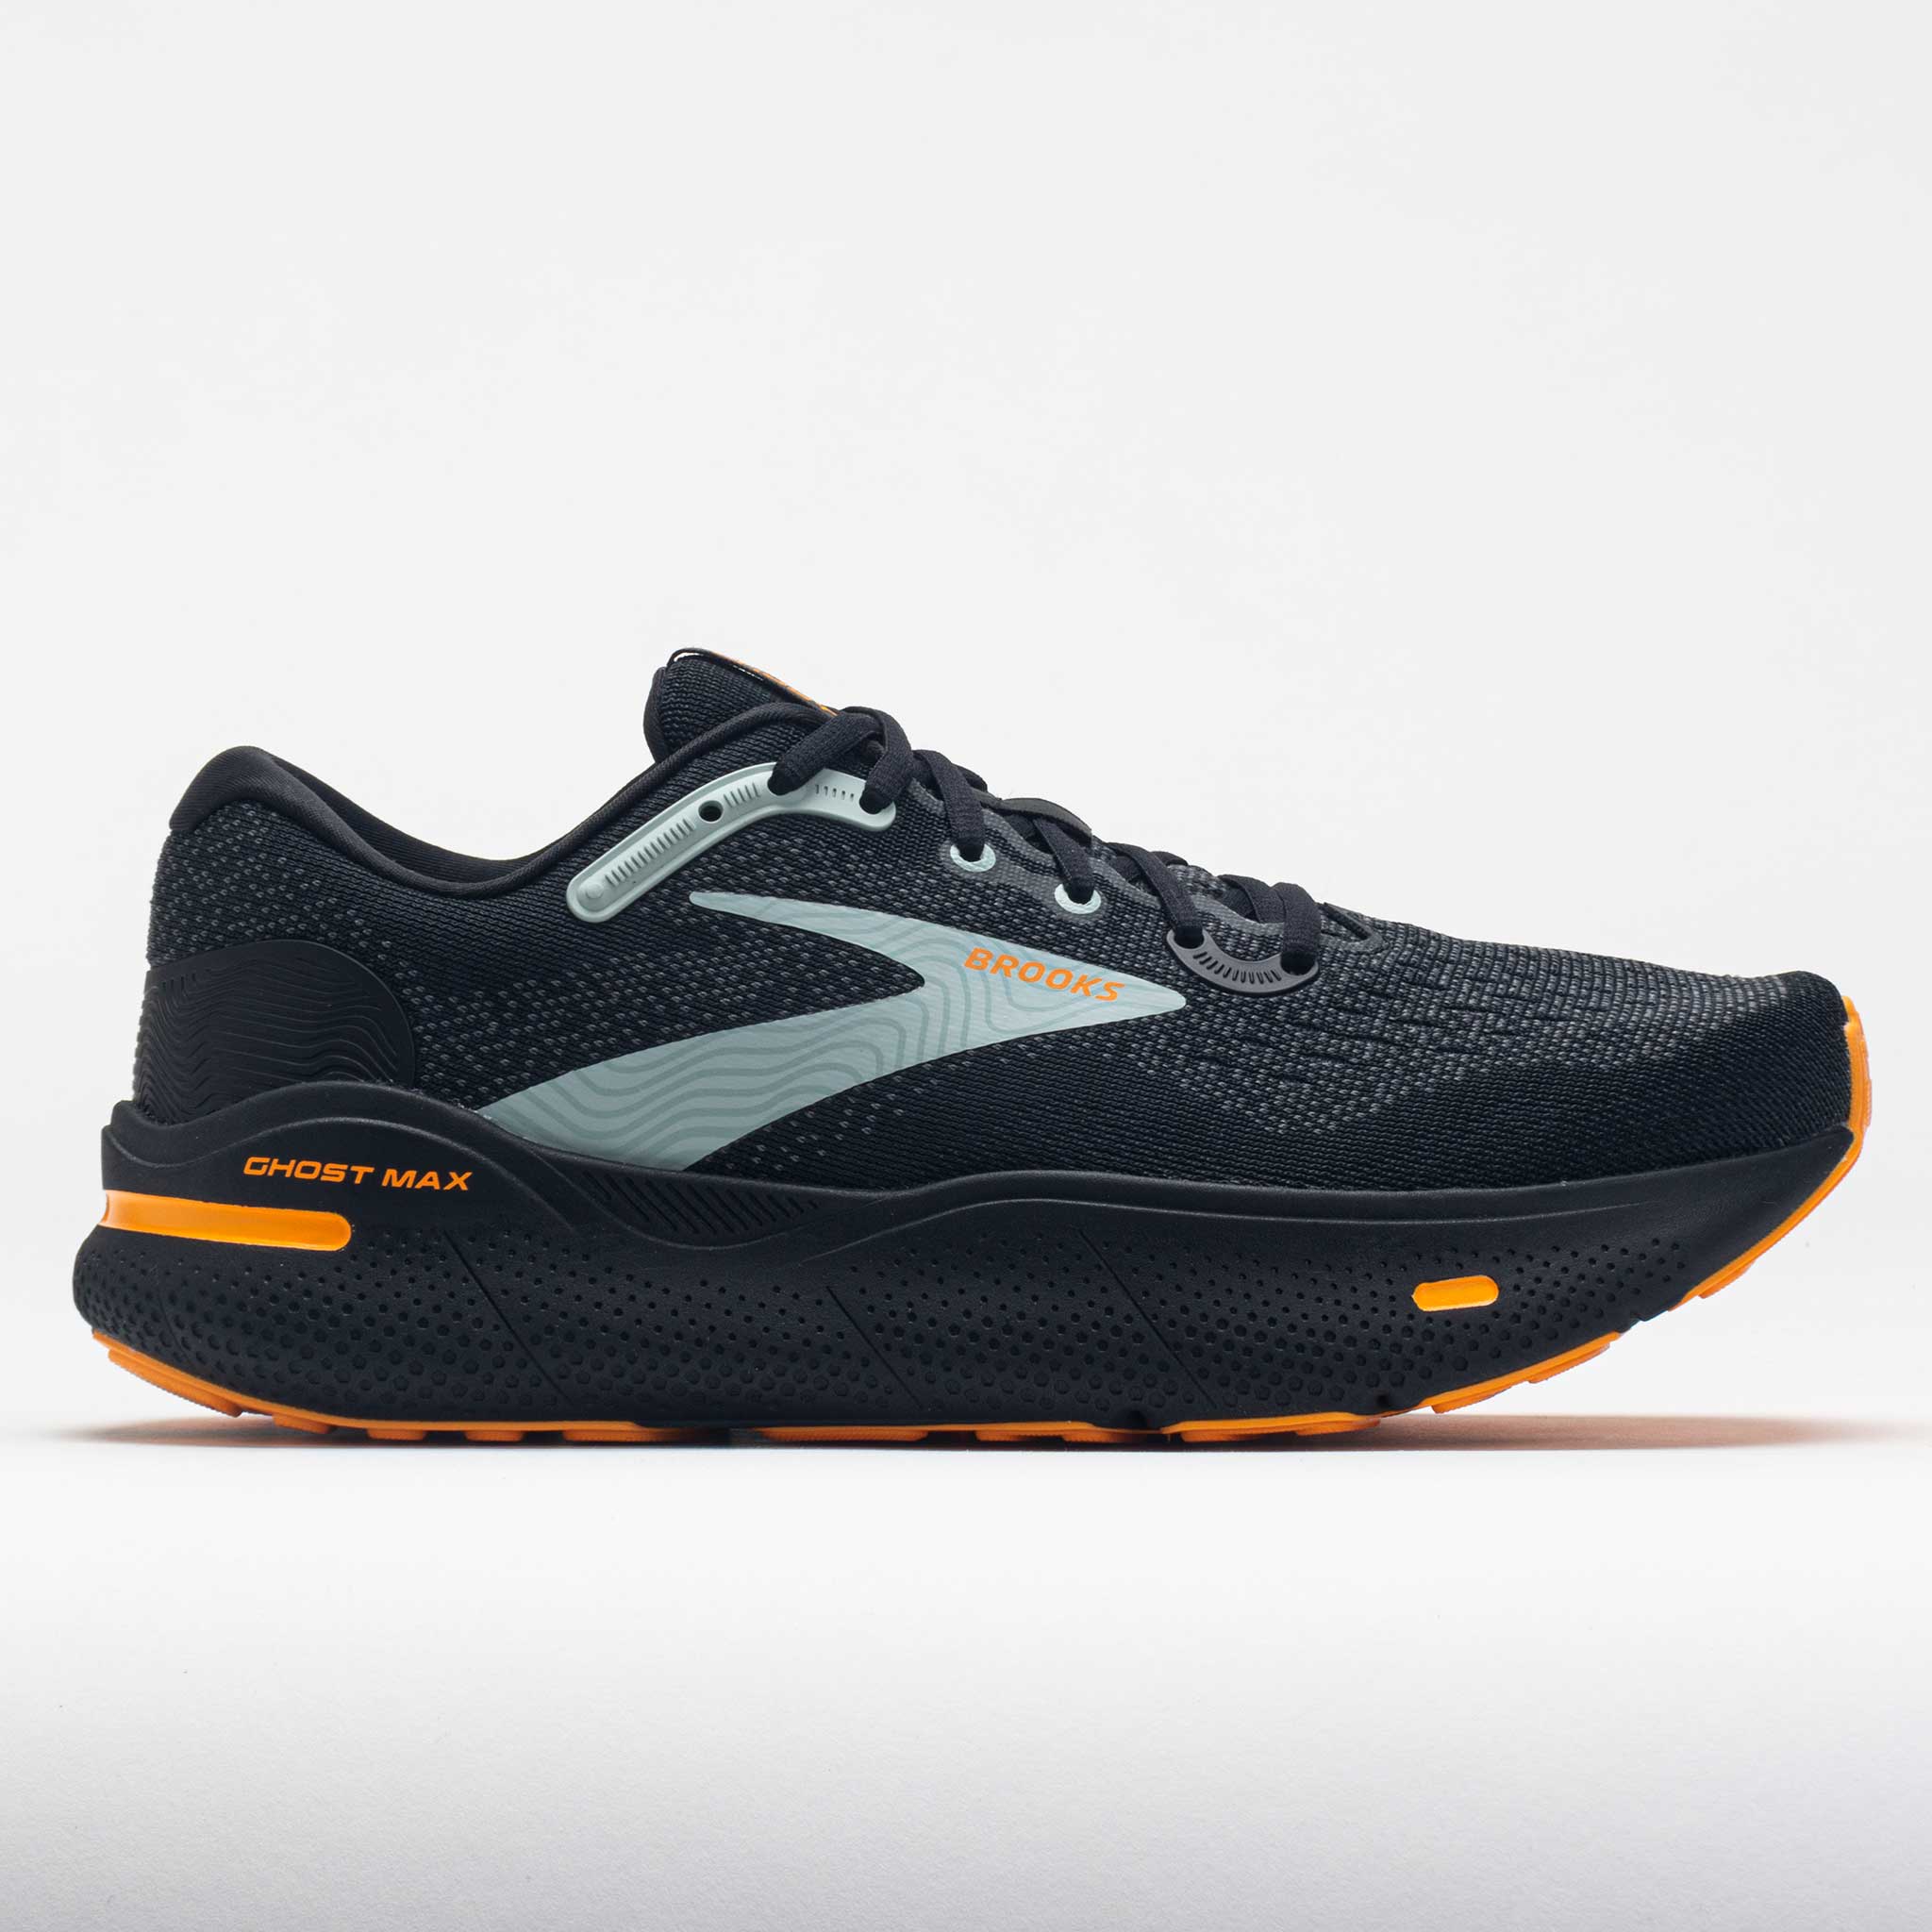 Brooks Ghost Max Men's Running Shoes Black/Orange/Cloud Blue Size 10.5 Width D - Medium